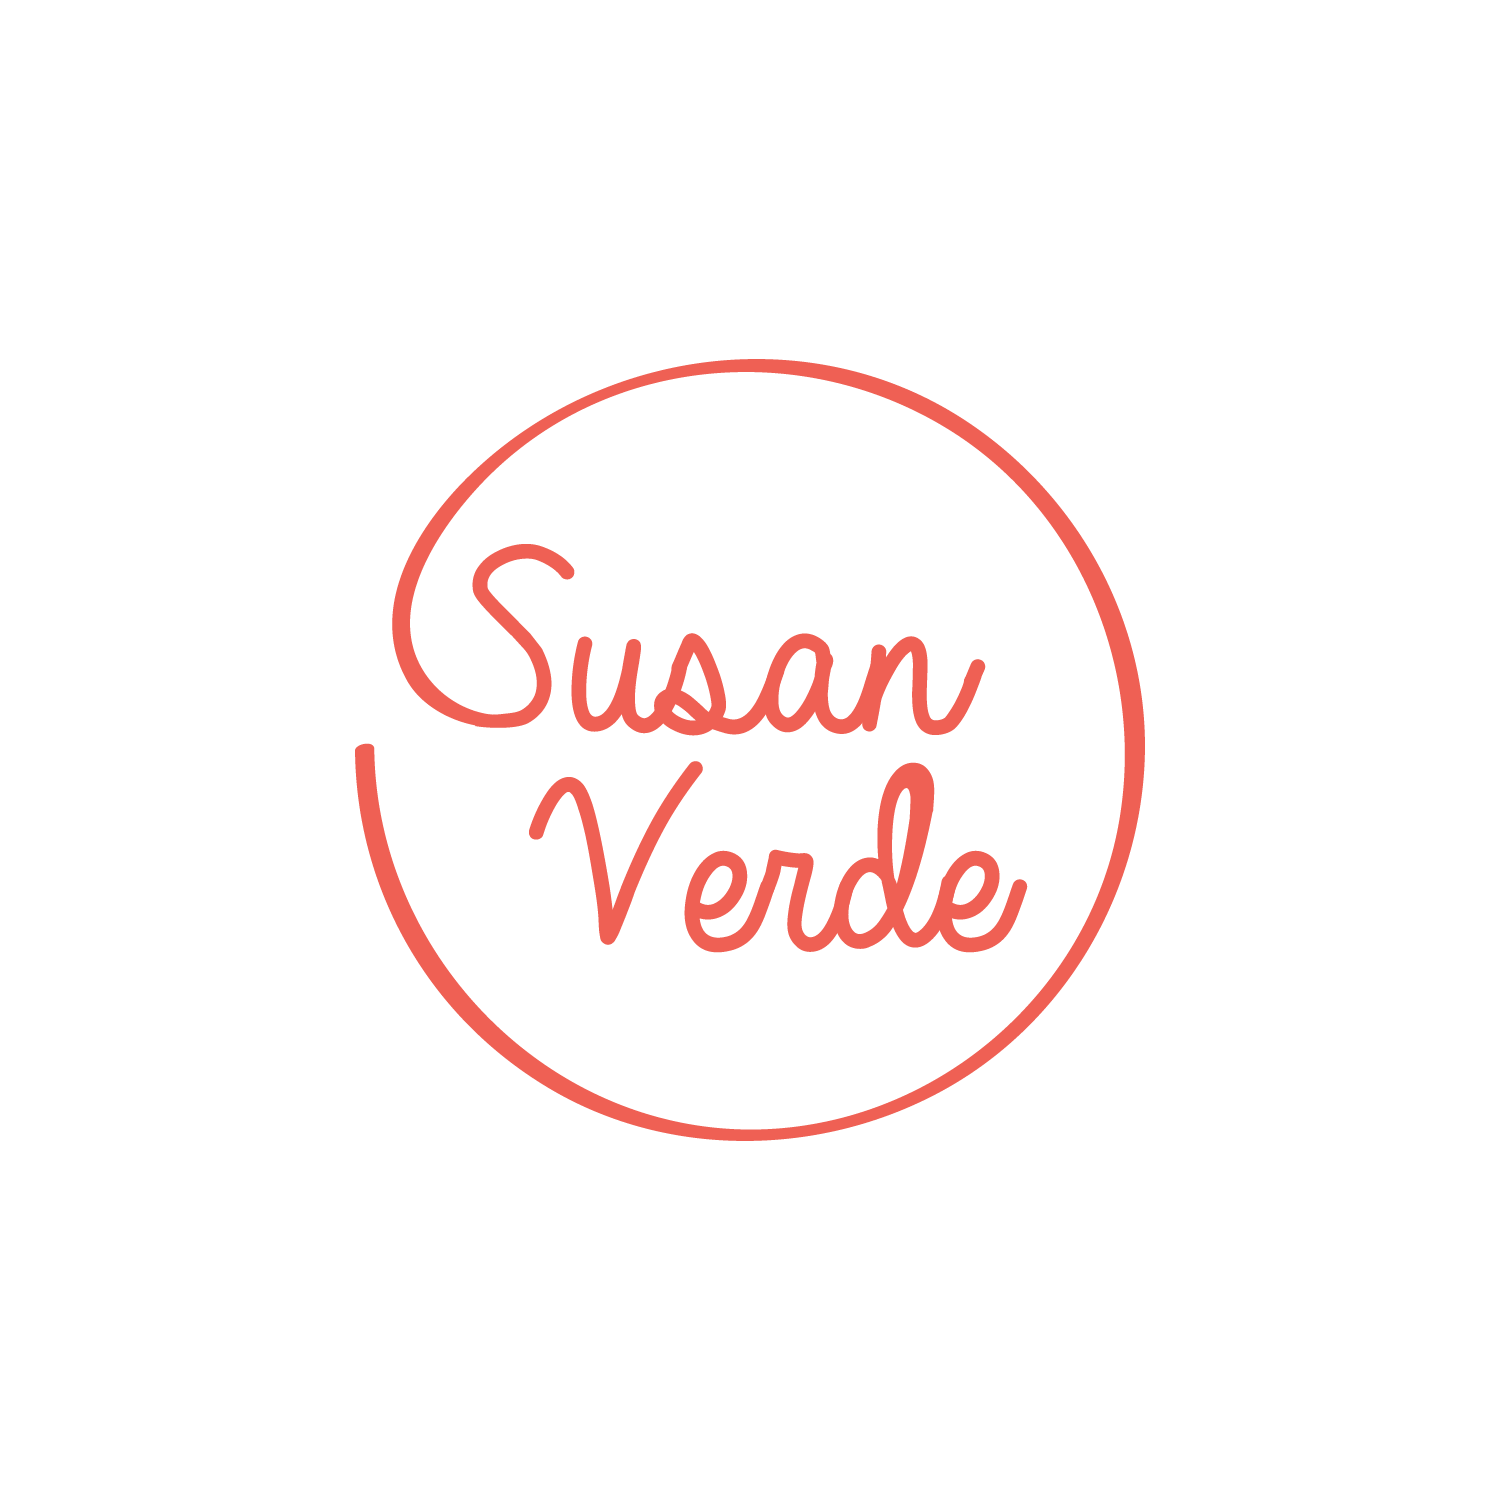 Susan Verde